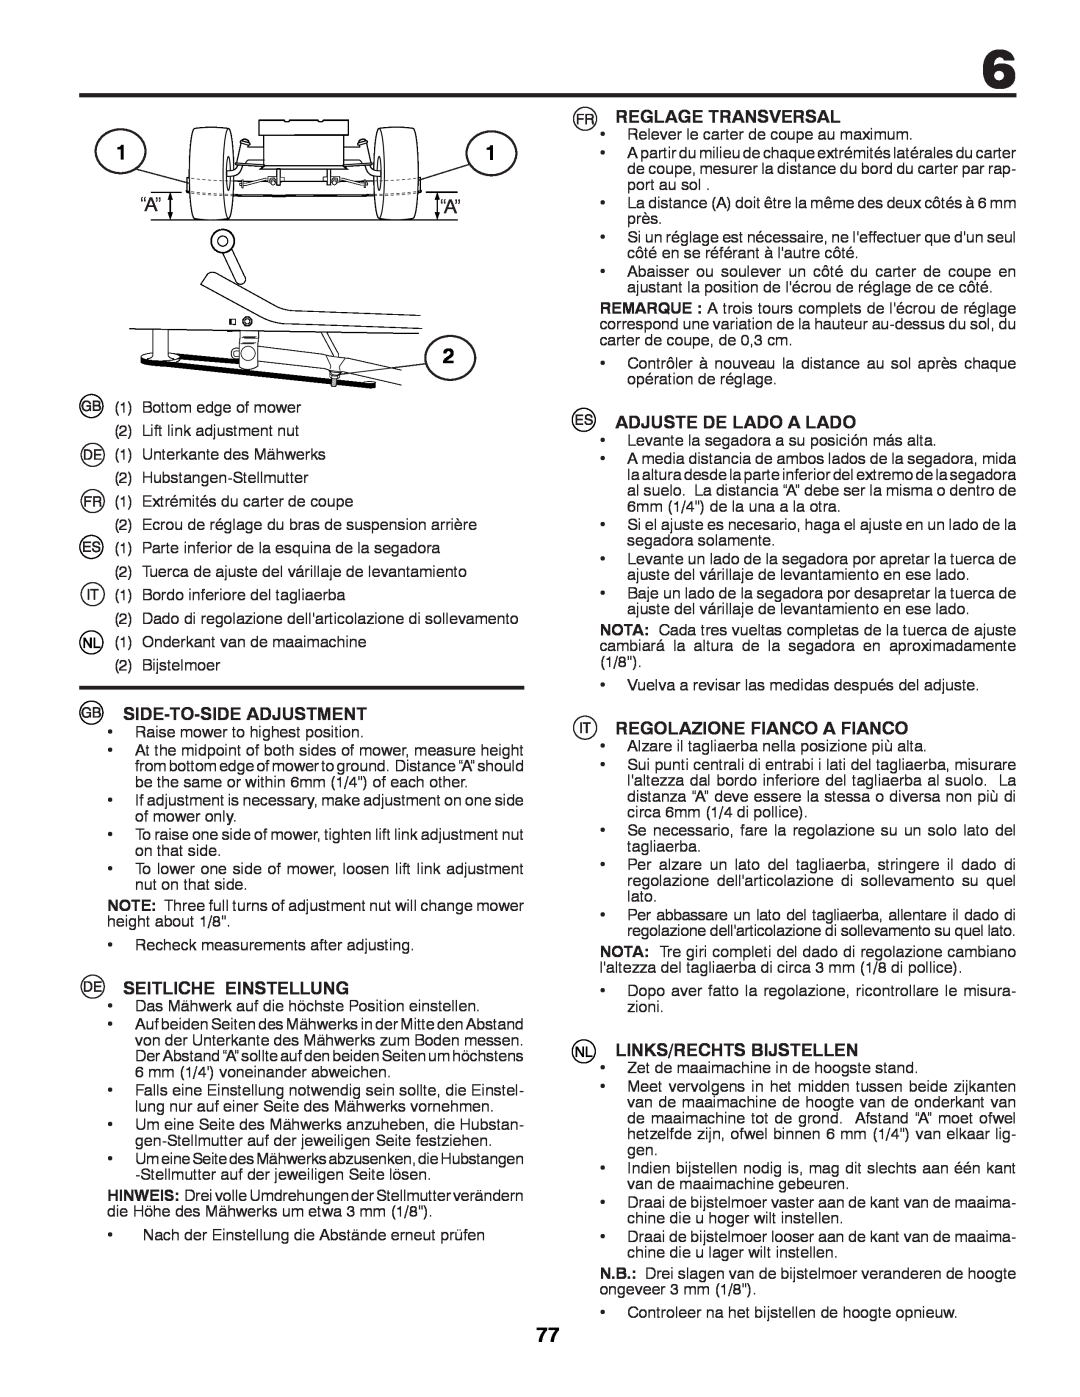 Partner Tech P200107HRB instruction manual “A” “A”, Side-To-Side Adjustment, Seitliche Einstellung, Reglage Transversal 